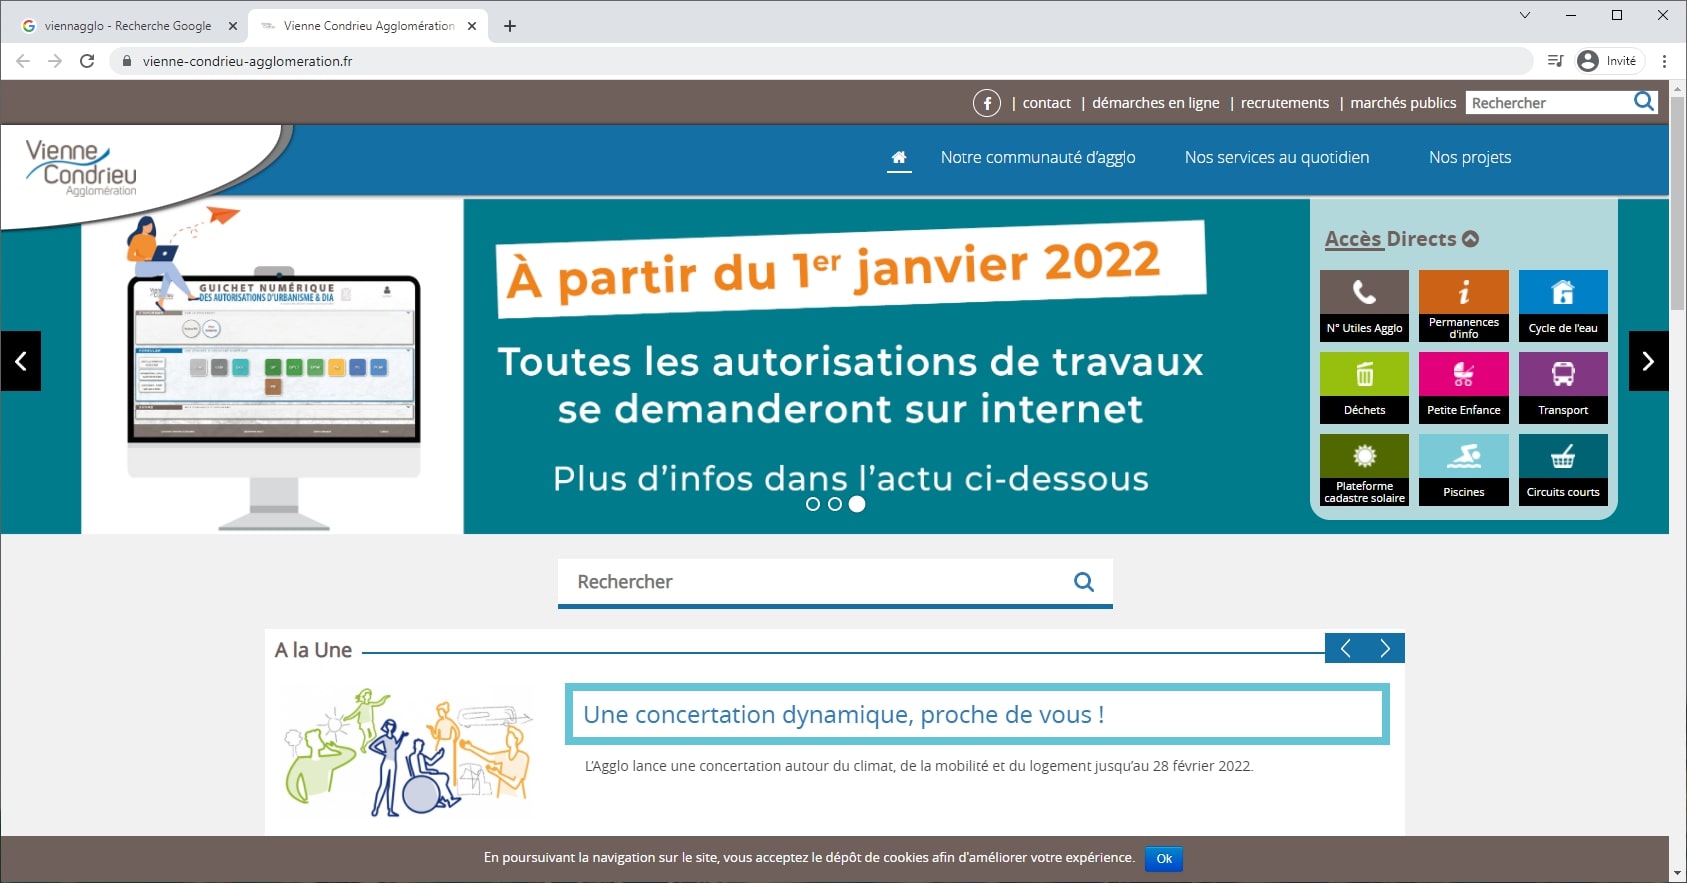 Interface web Vienne Condrieu Agglomération (France)